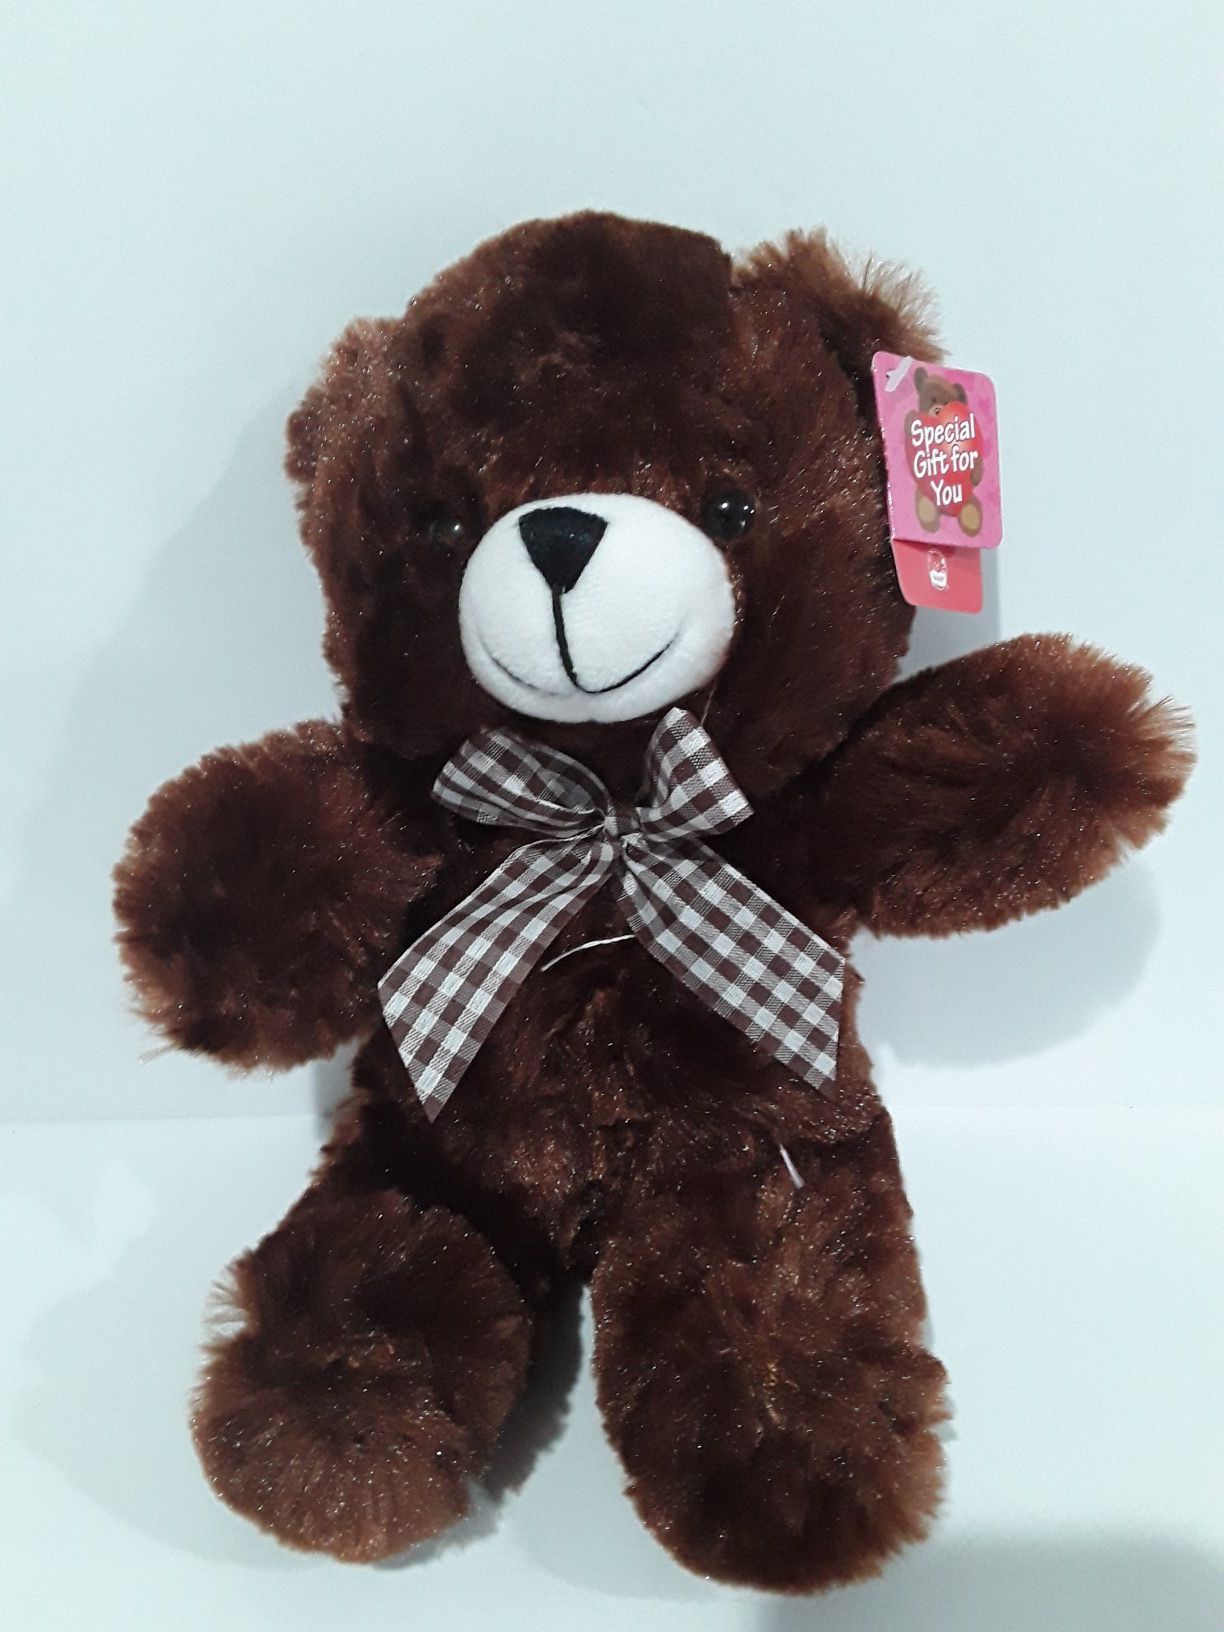 Brand New Brown 9" Teddy Bear Stuffed Animal Plush Toy Valentine's Gift